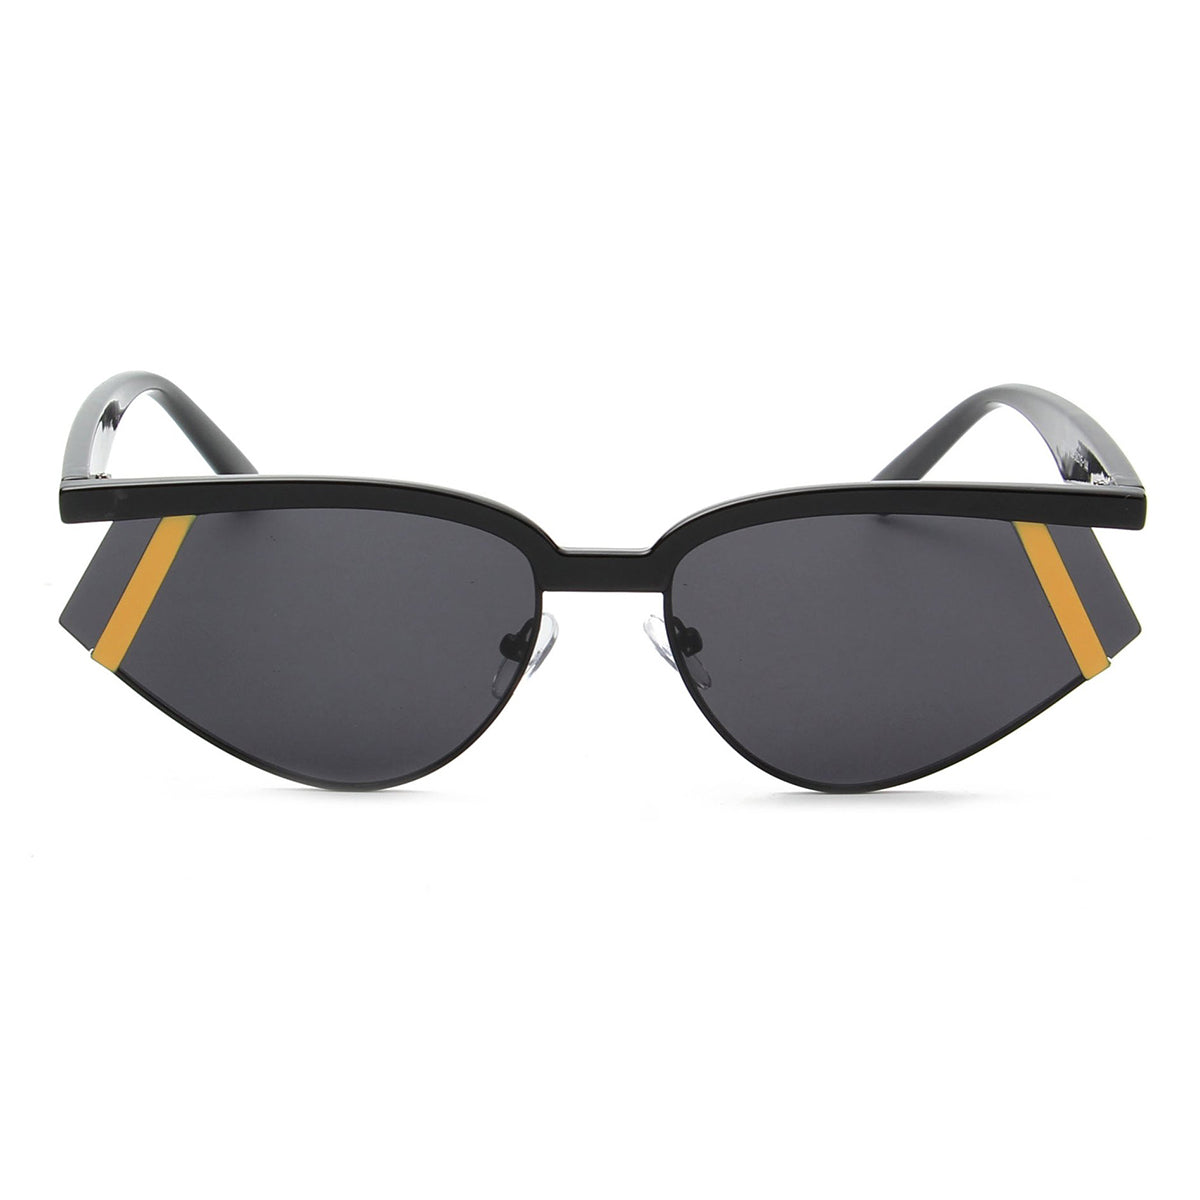 Black and Gold Futuristic Rectangle Glasses